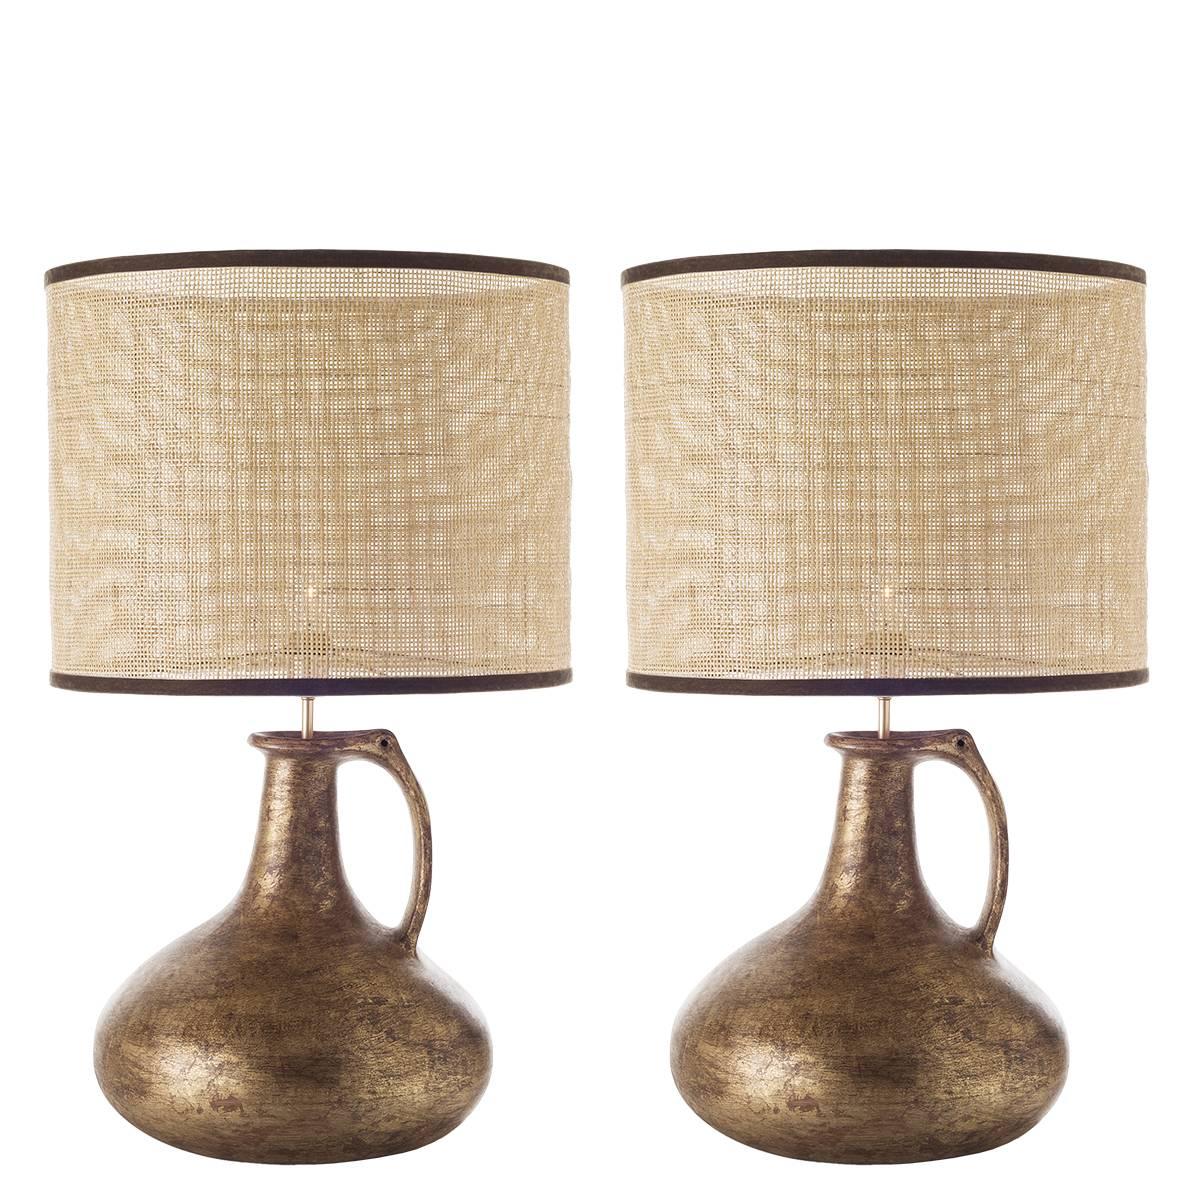 Pair of Jug Ceramic Table Lamps For Sale